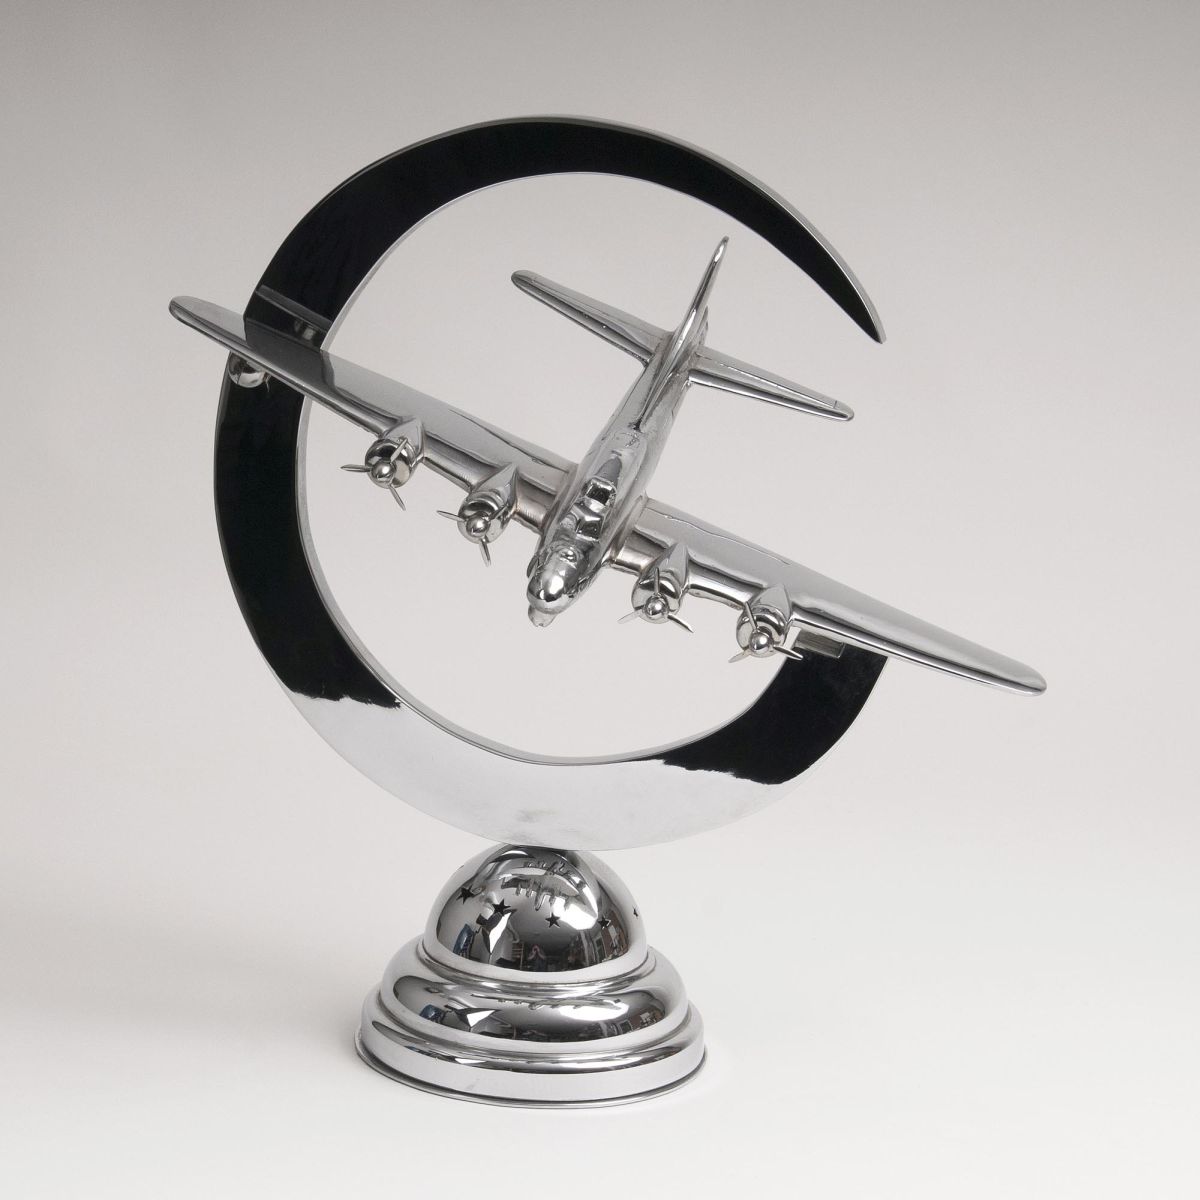 A Propeller Plane Model as Table Lamp